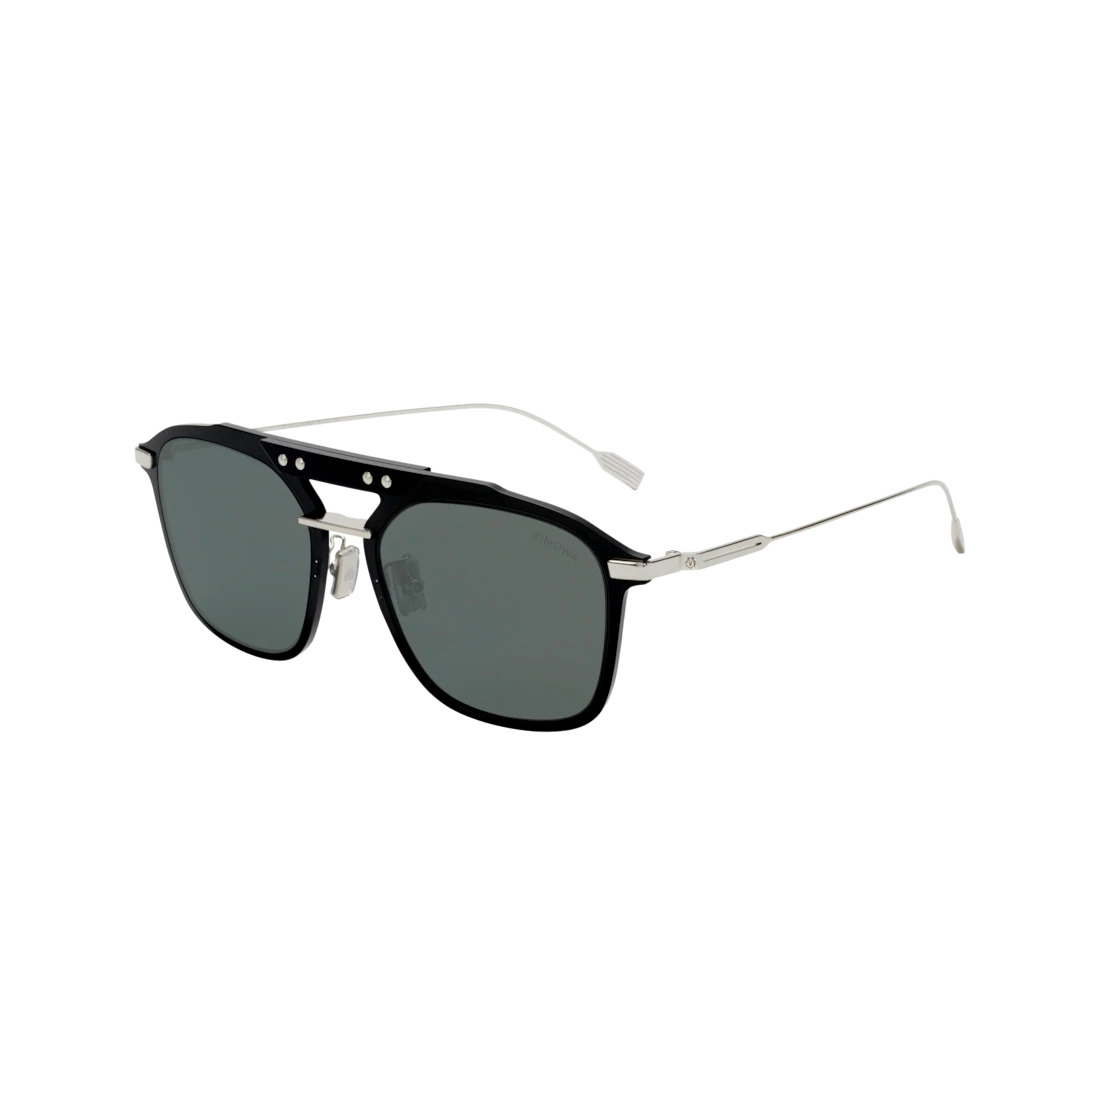 Eyewear Navigator Black Sunglasses - 3